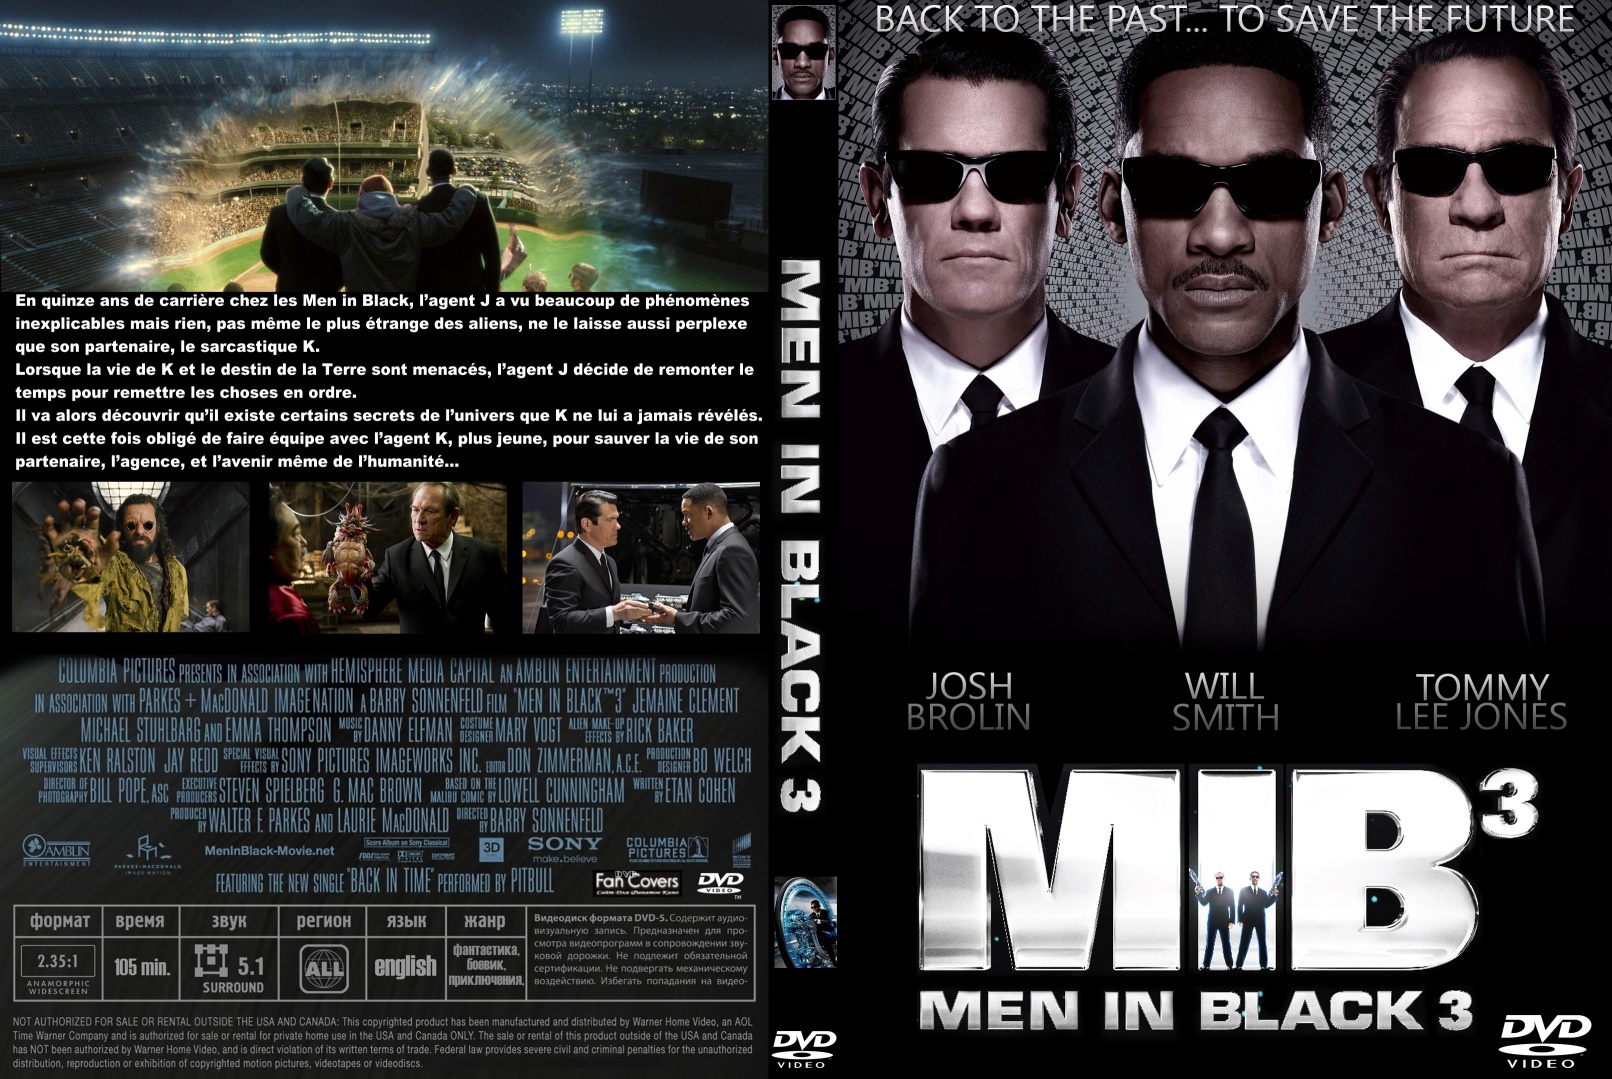 Jaquette DVD Men in black 3 custom